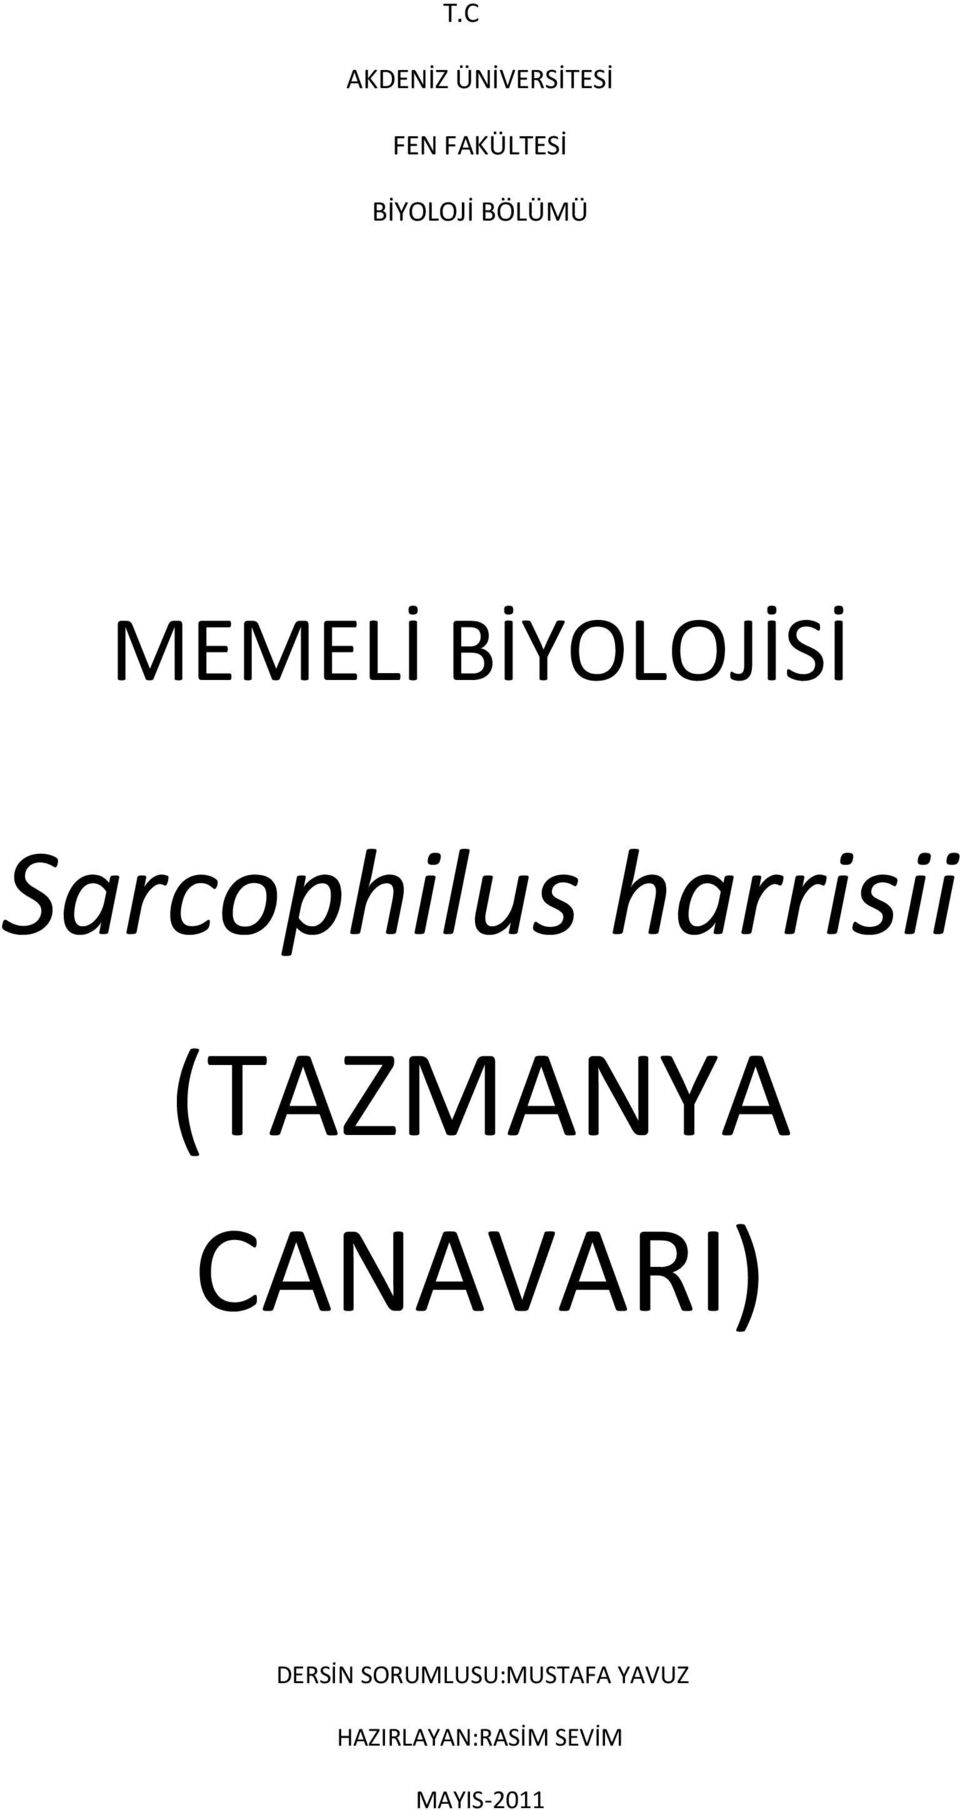 Sarcophilus harrisii (TAZMANYA CANAVARI)